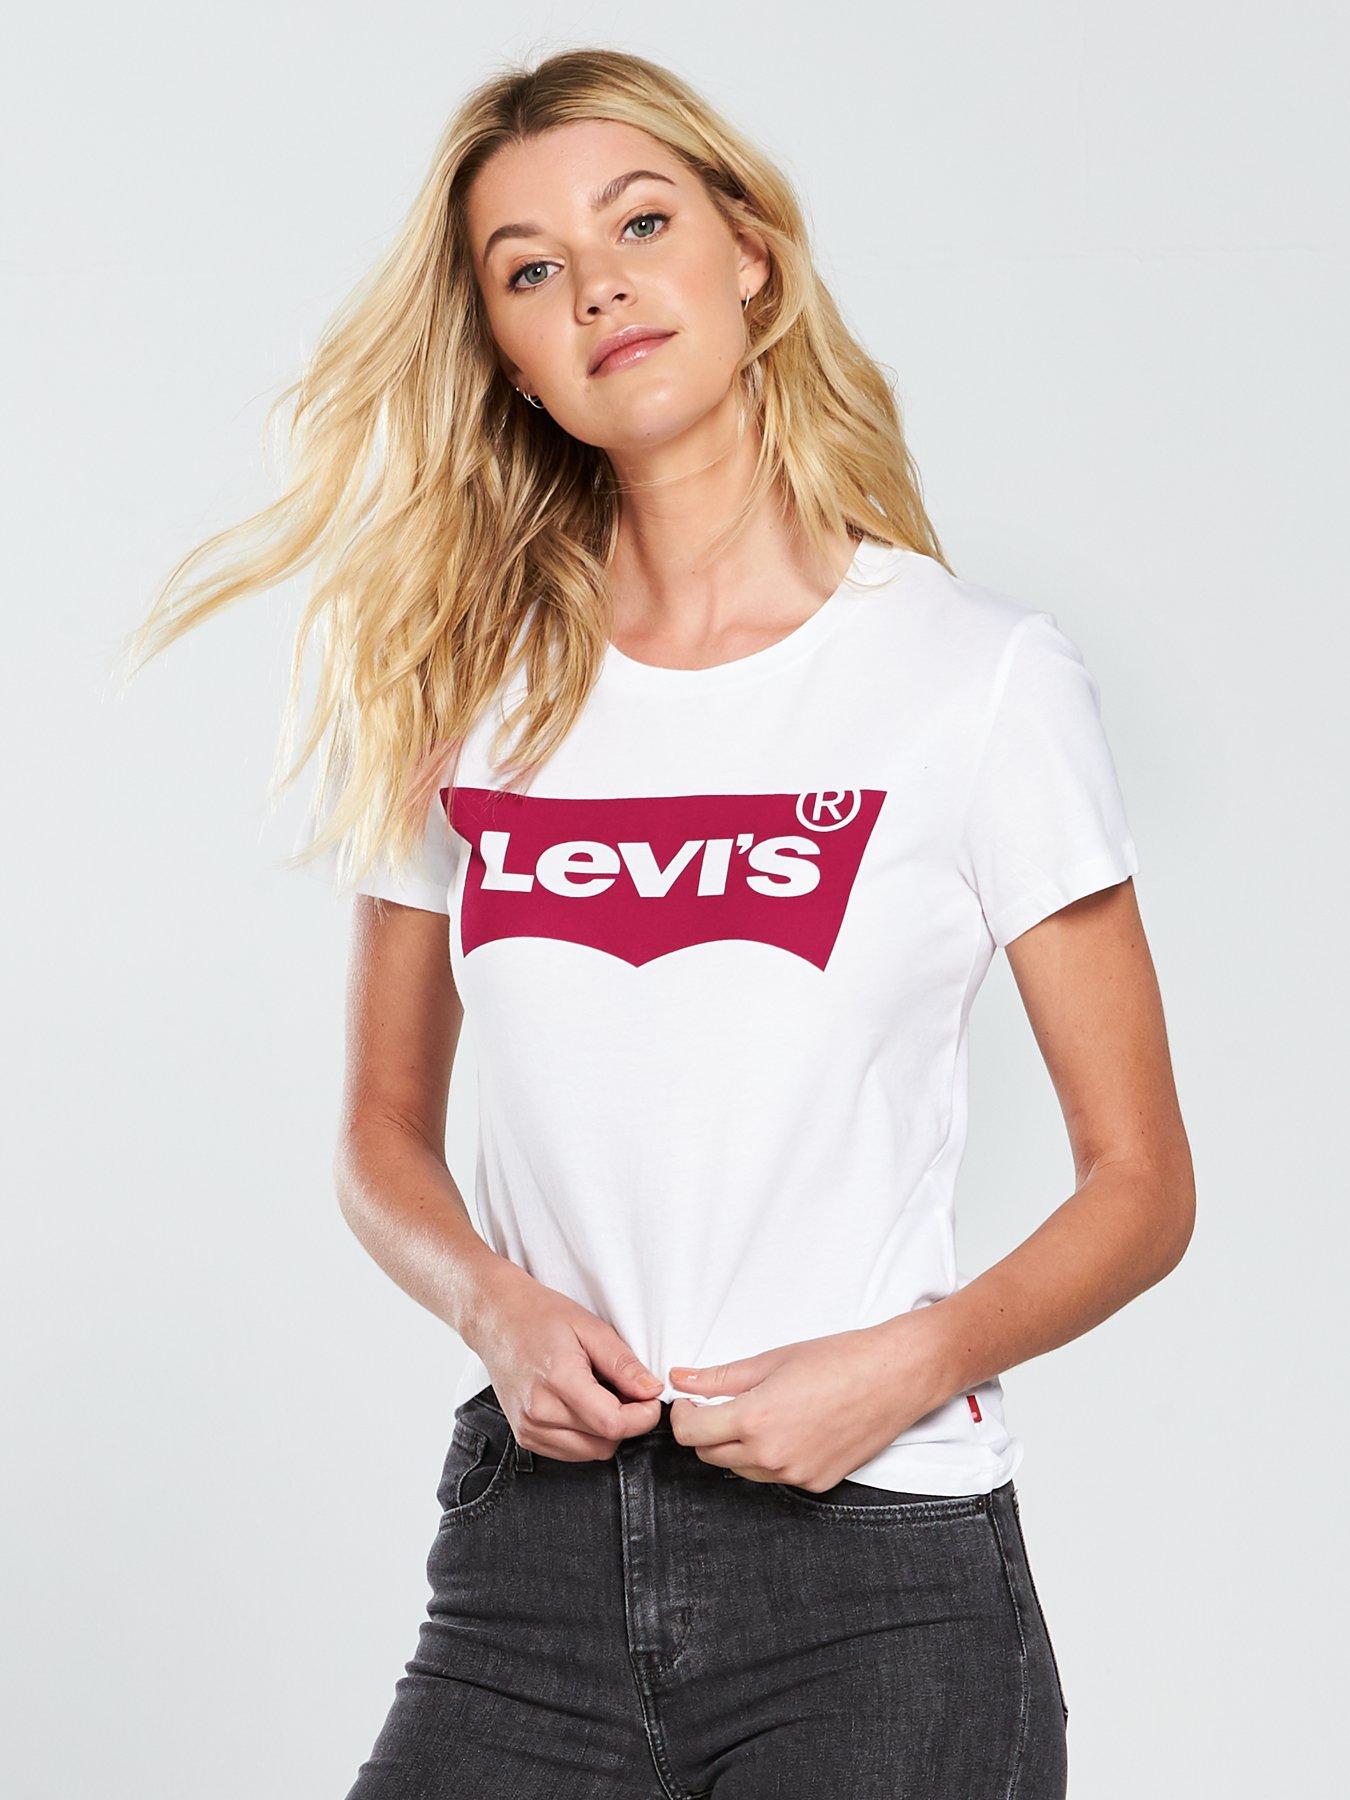 levi's tops for ladies